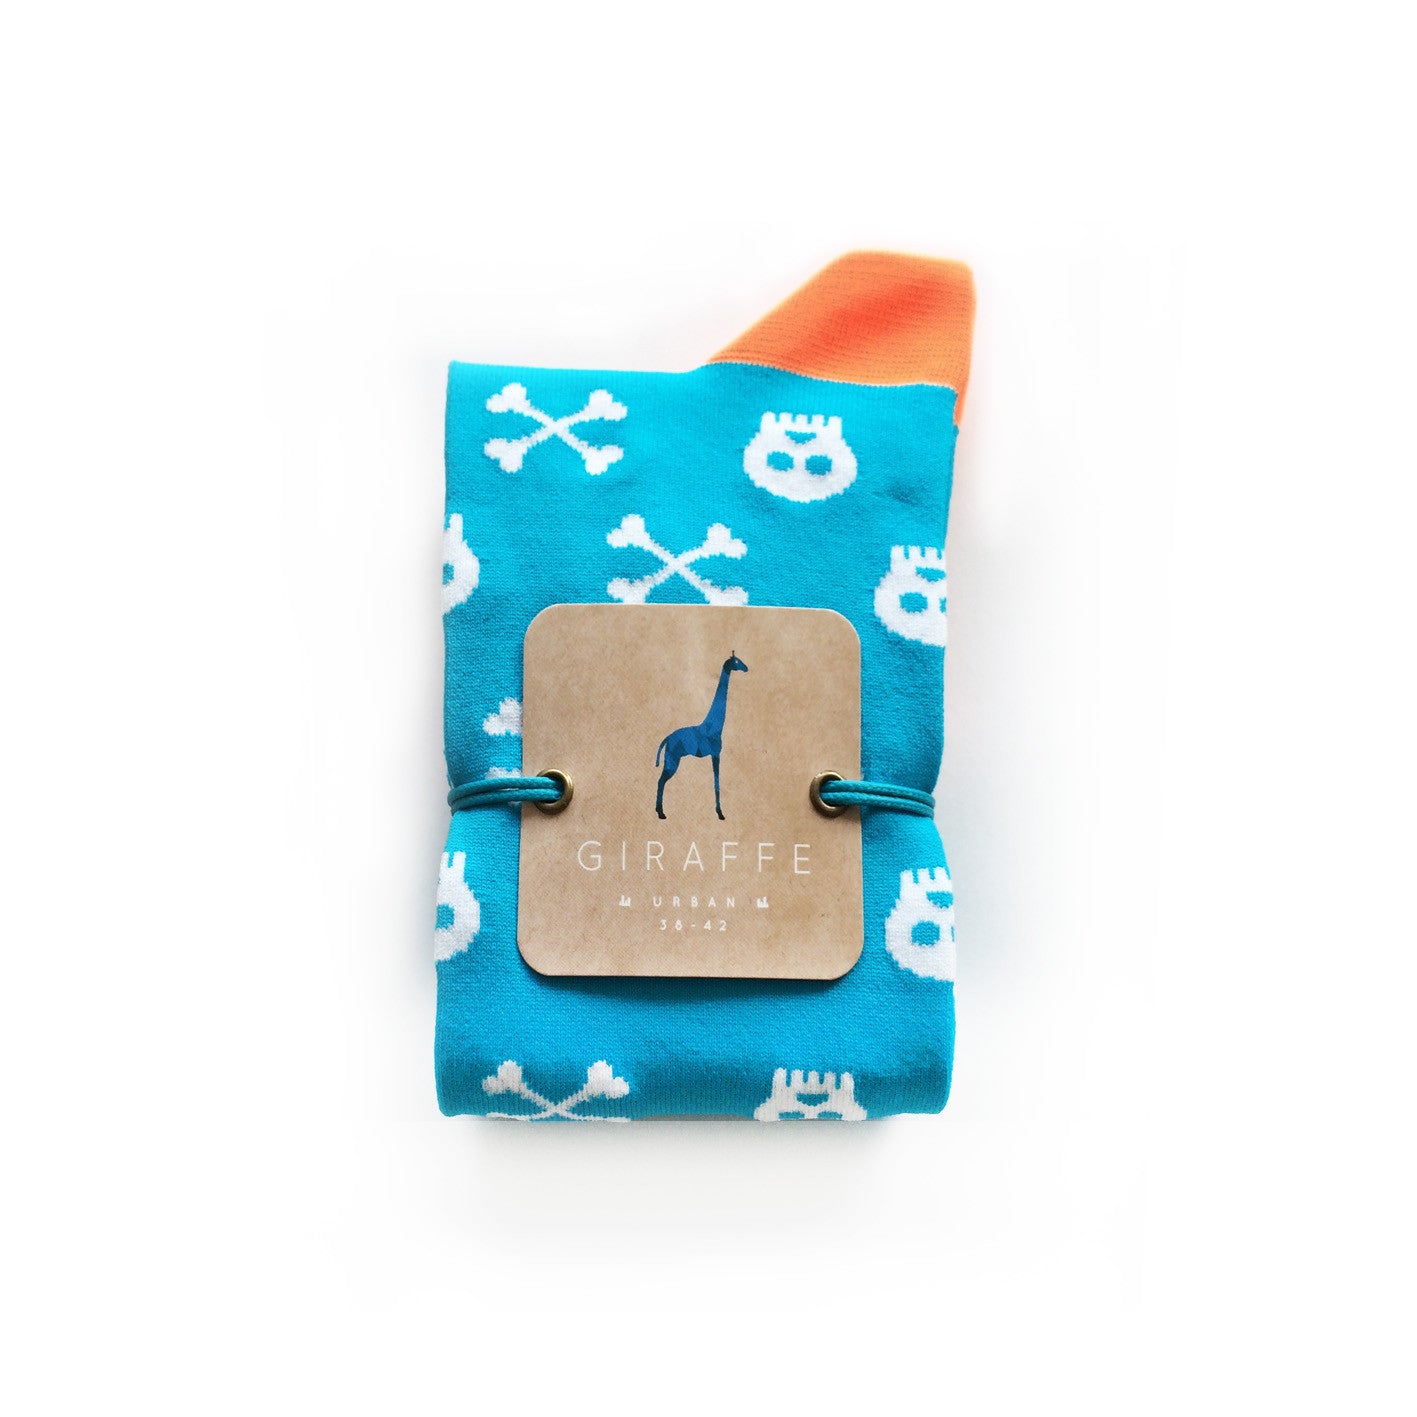 Giraffecool-Giraffe-Cool-Brand-Blue-Orange-And-White-Skulls-And-Bones-Microfiber-Fashion-Socks-Closed